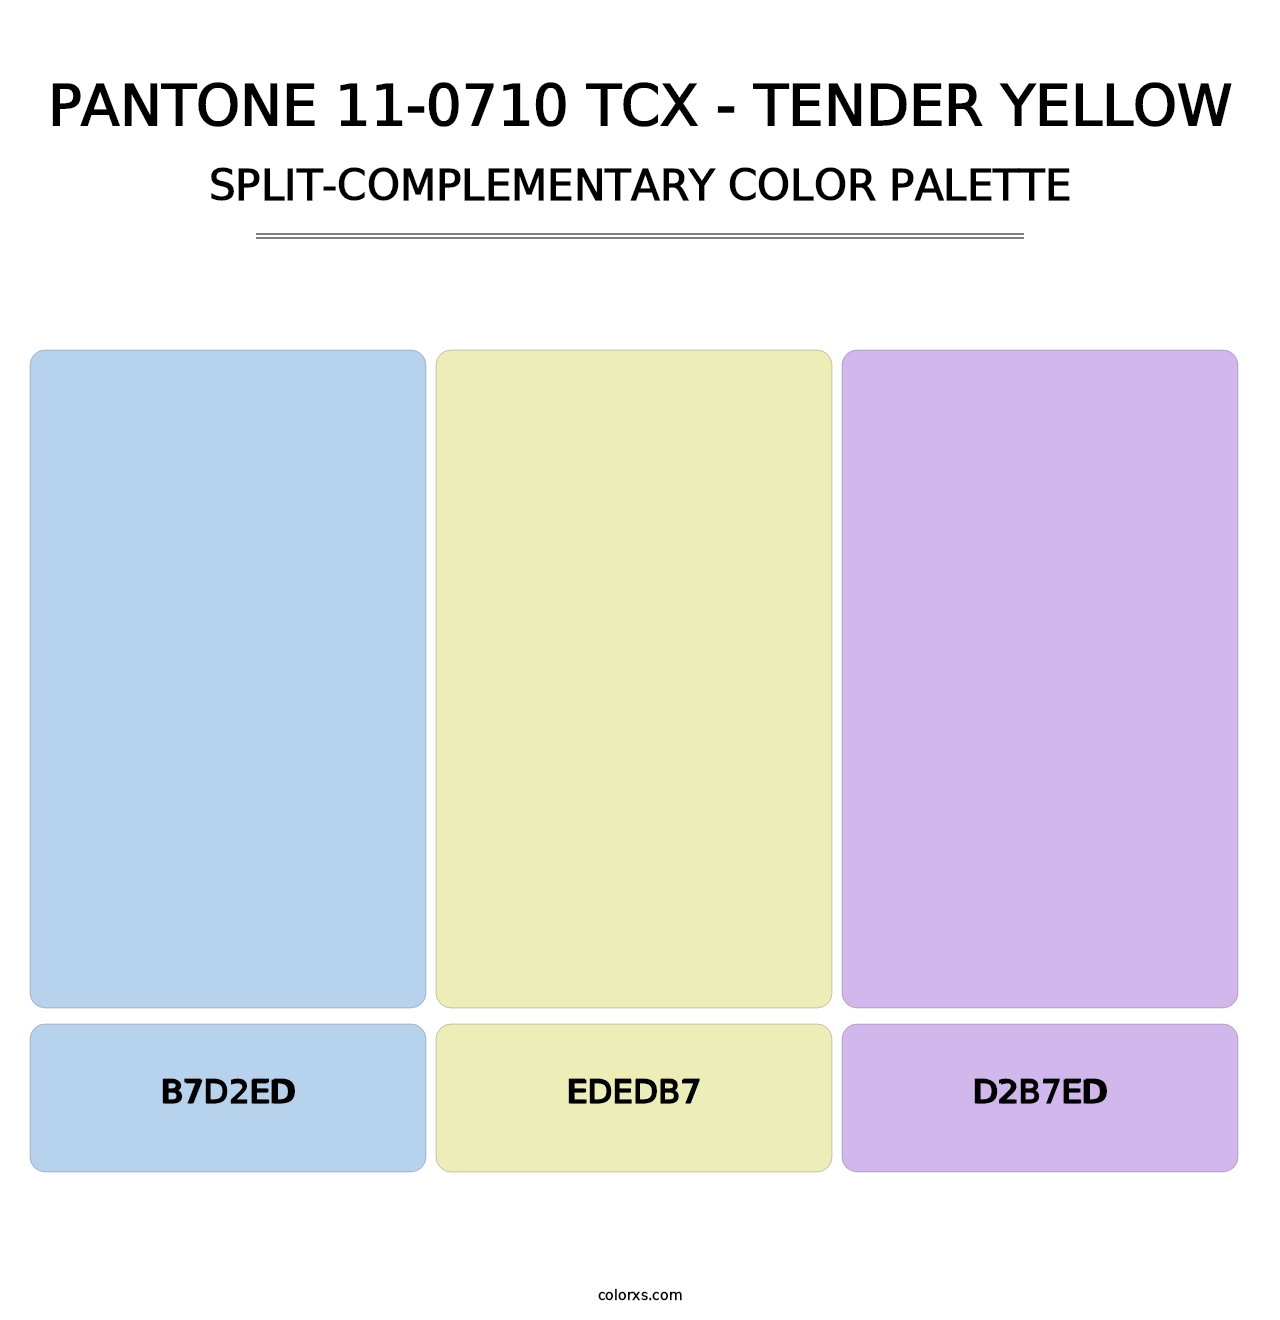 PANTONE 11-0710 TCX - Tender Yellow - Split-Complementary Color Palette